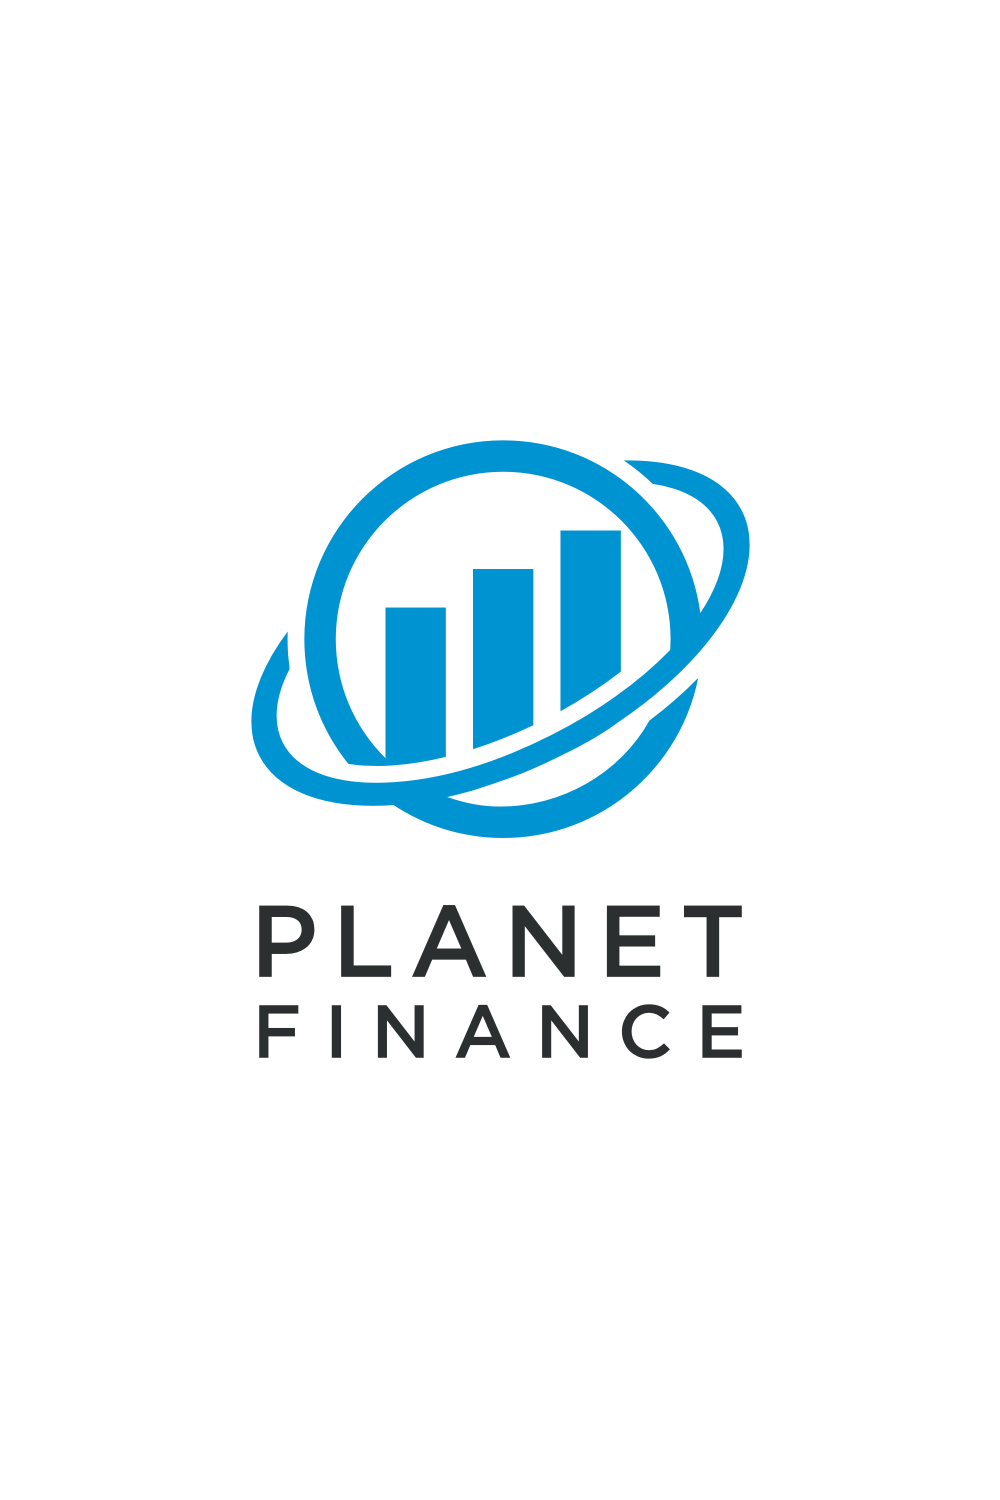 Planet Finance Marketing Logo Design Vector pinterest image.